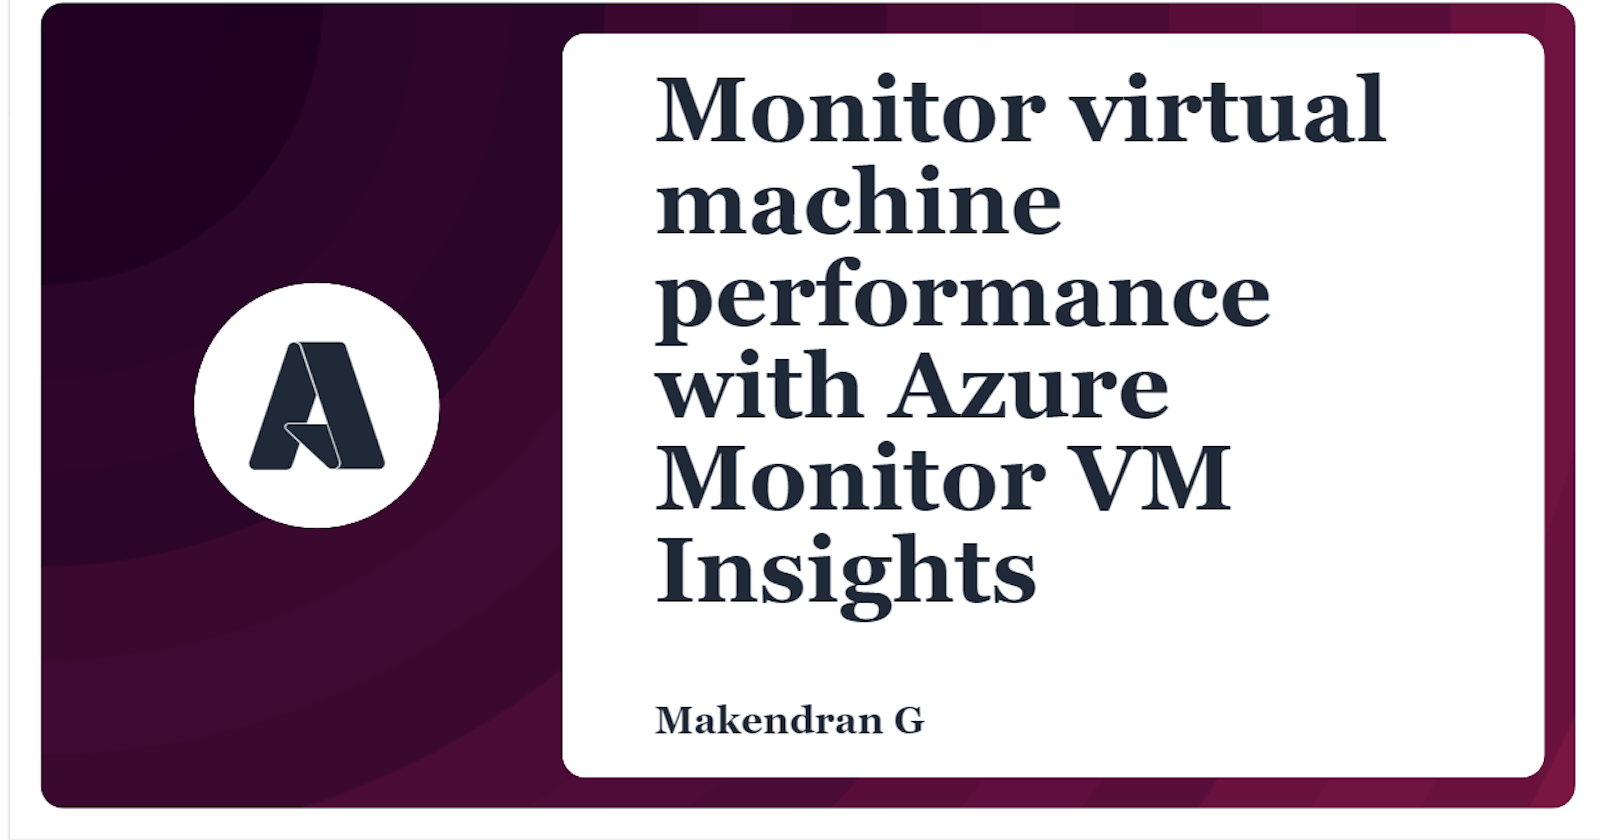 Monitor virtual machine performance with Azure Monitor VM Insights